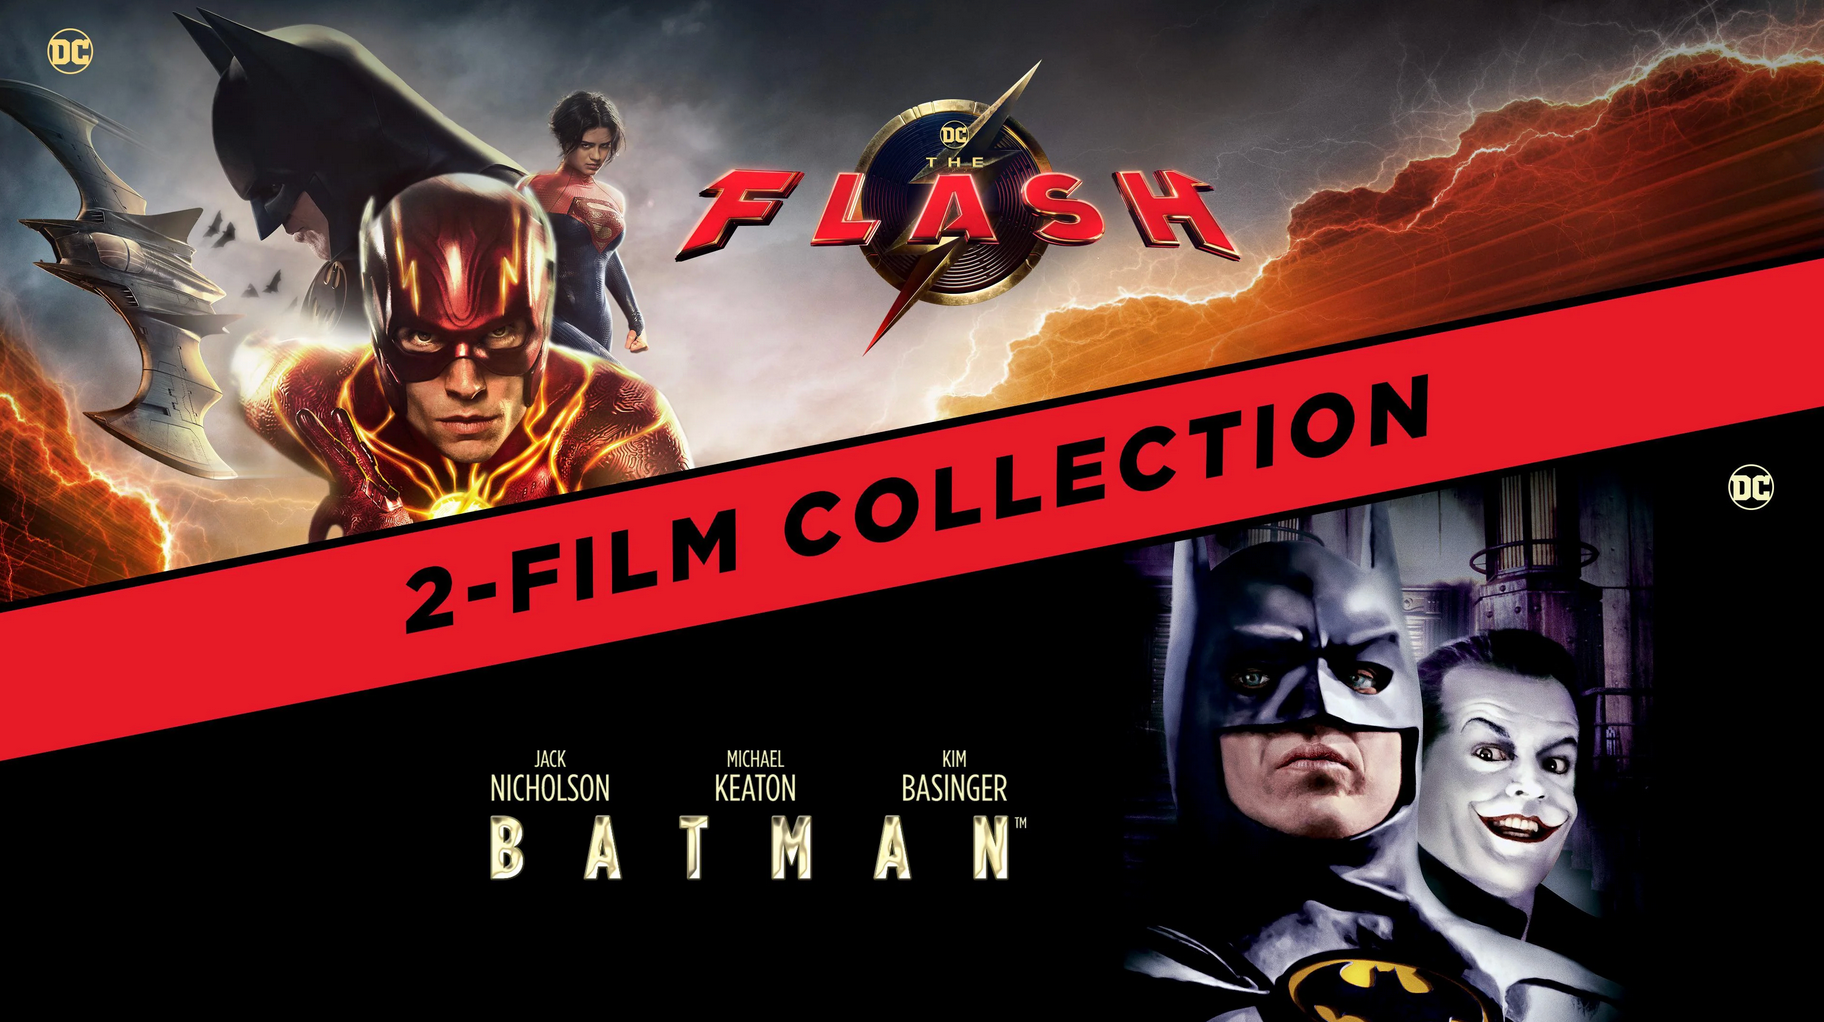 THE FLASH Final Season Coming To Blu-Ray This August - DC Comics News